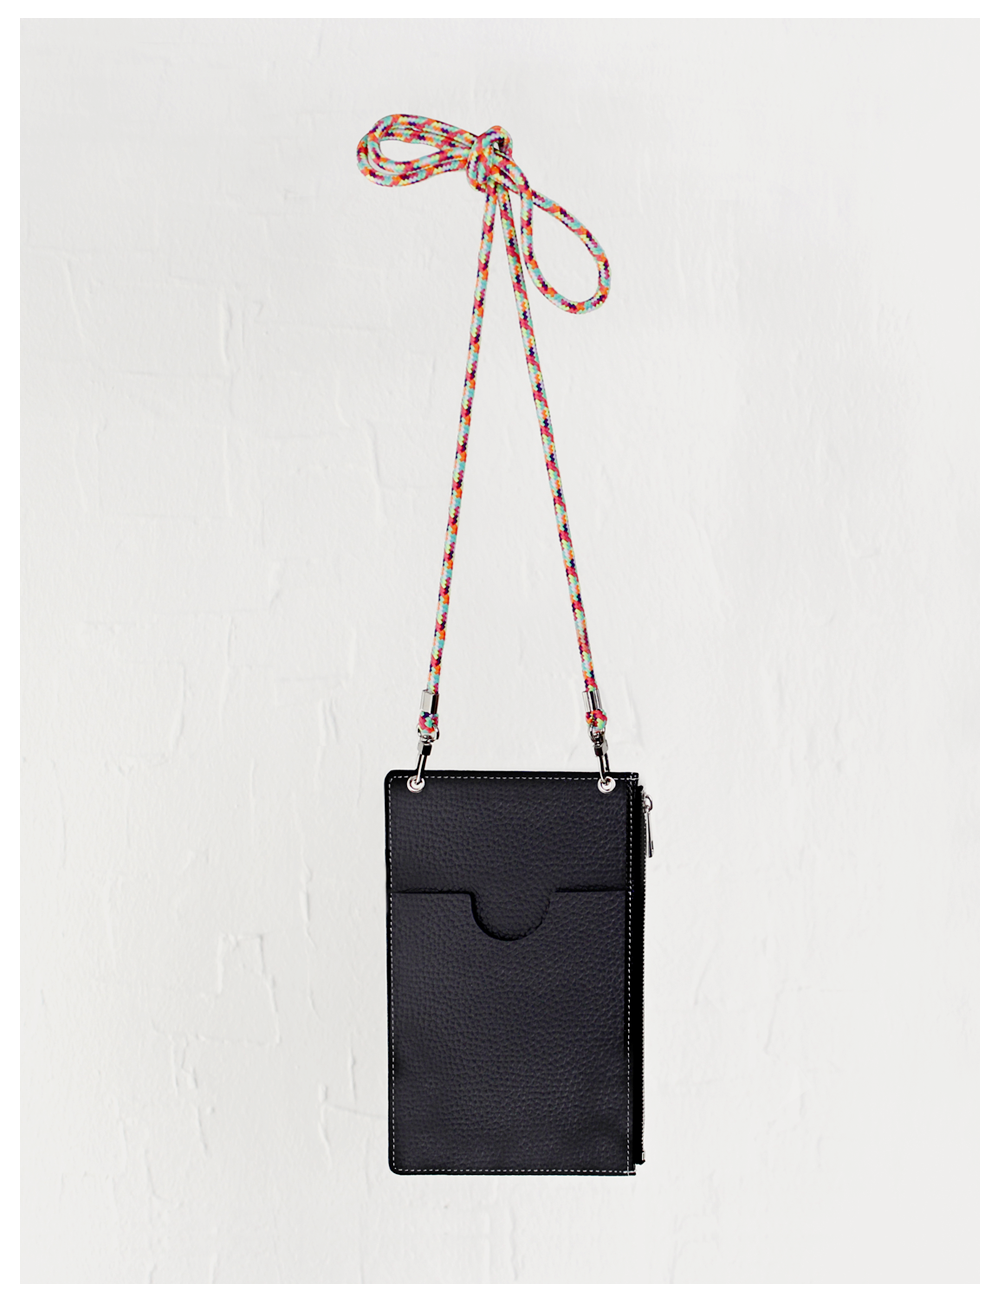 Classy chain leather phone mini bag_Black